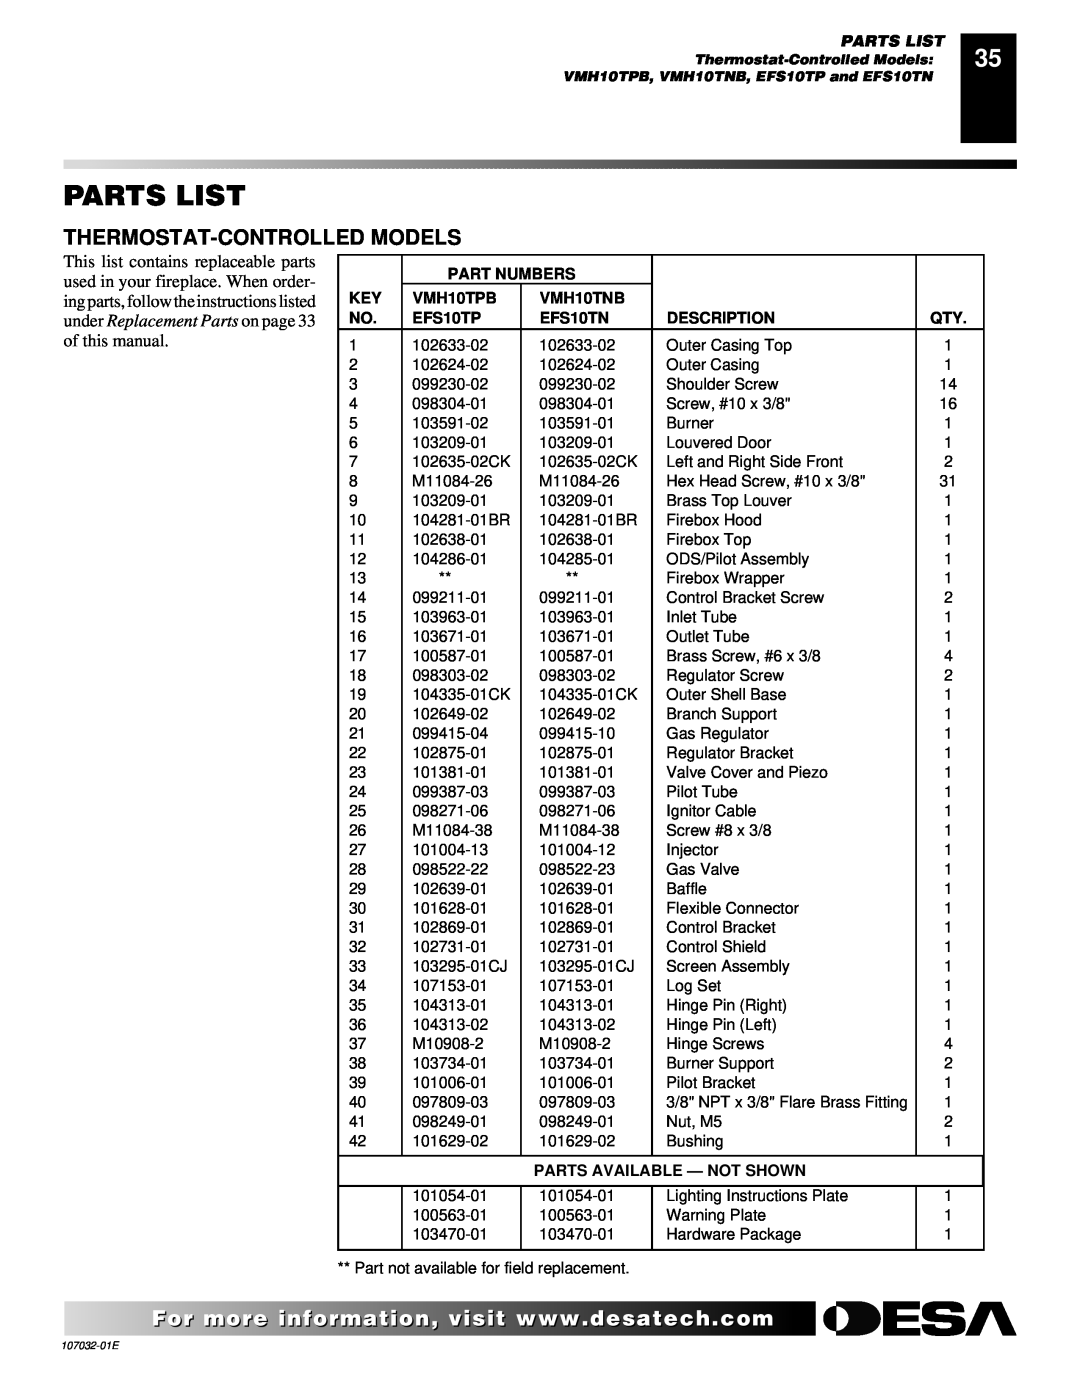 Desa EFS26NR Parts List, Thermostat-Controlledmodels, Part Numbers, VMH10TPB, VMH10TNB, EFS10TP, EFS10TN, Description 